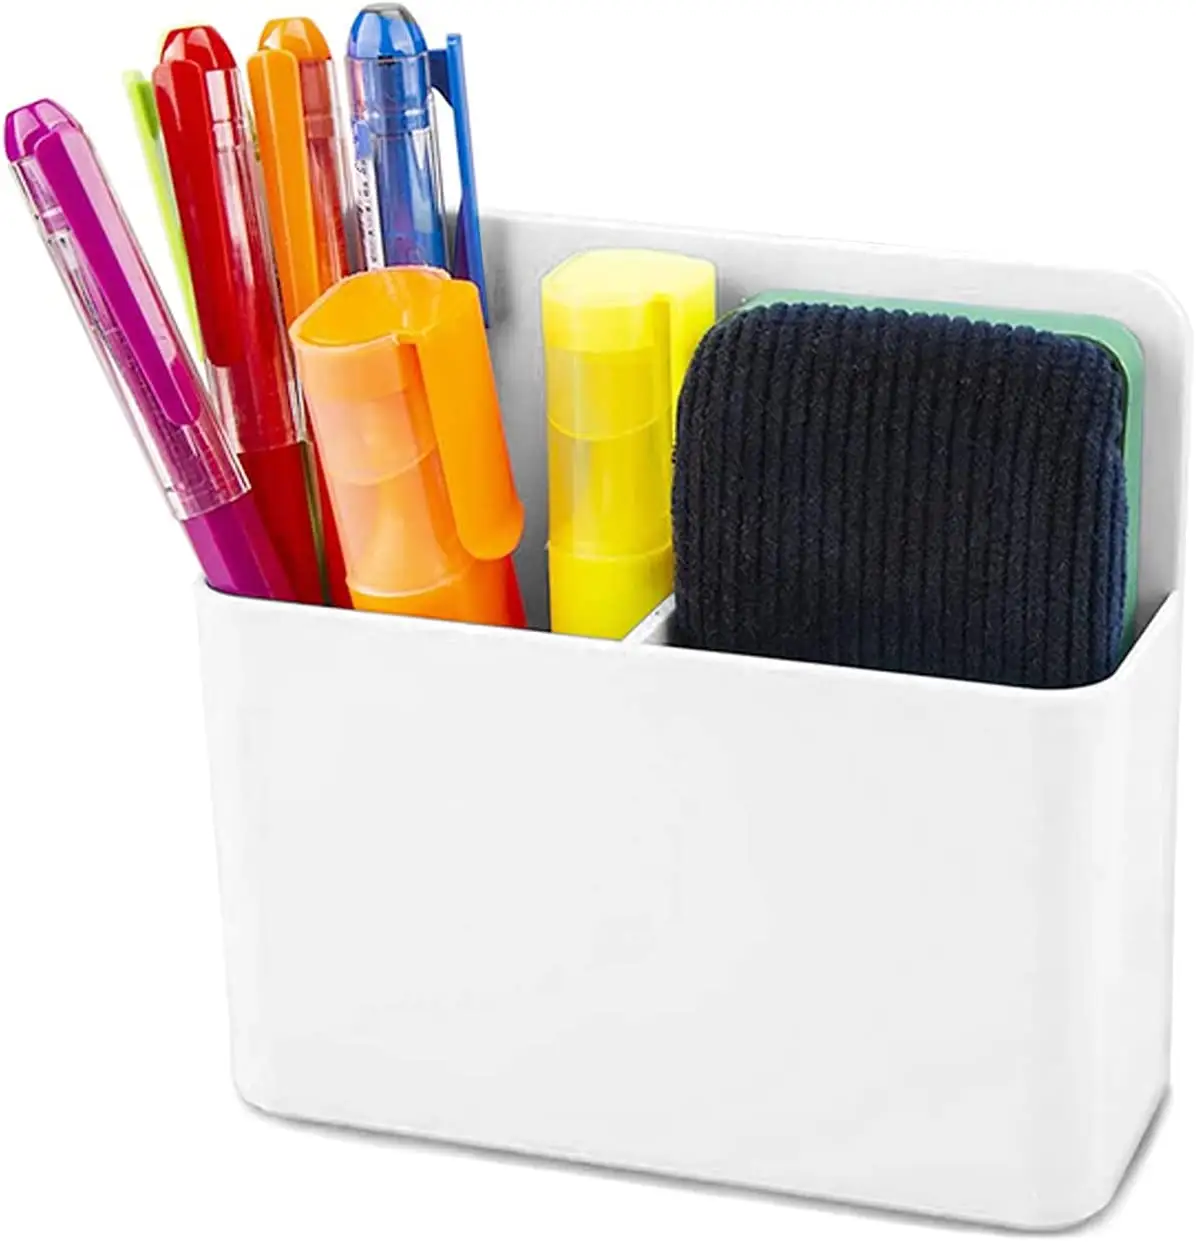 Conjunto de marcador de plástico, venda quente, escritório, magnético, quadro branco, caixa de armazenamento, suporte para caneta